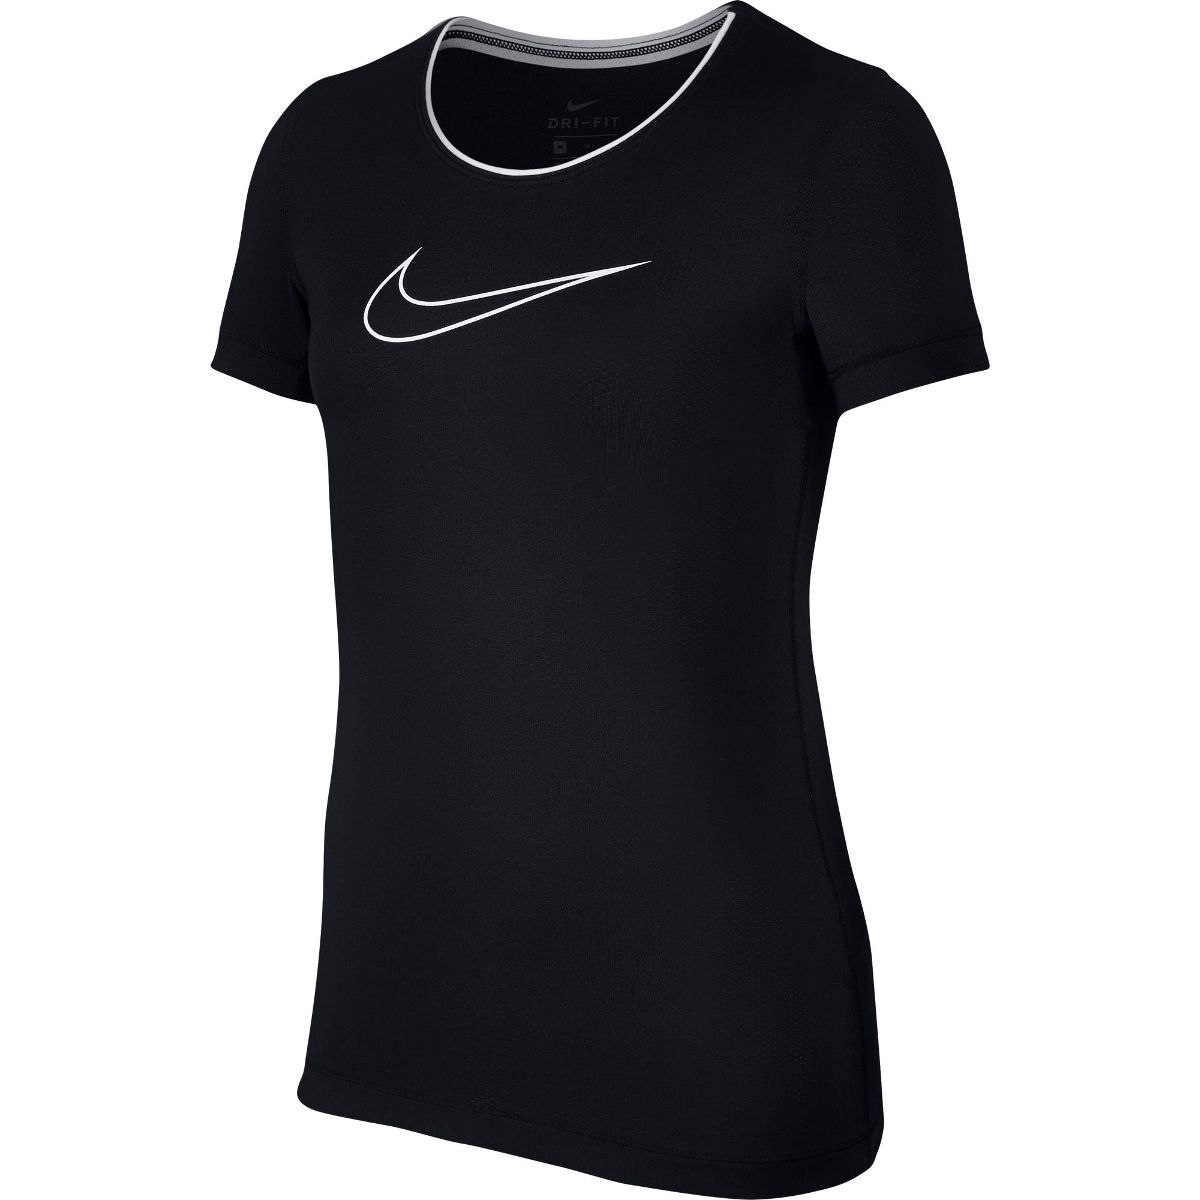 Nike Pro Girls' Top 890230-010